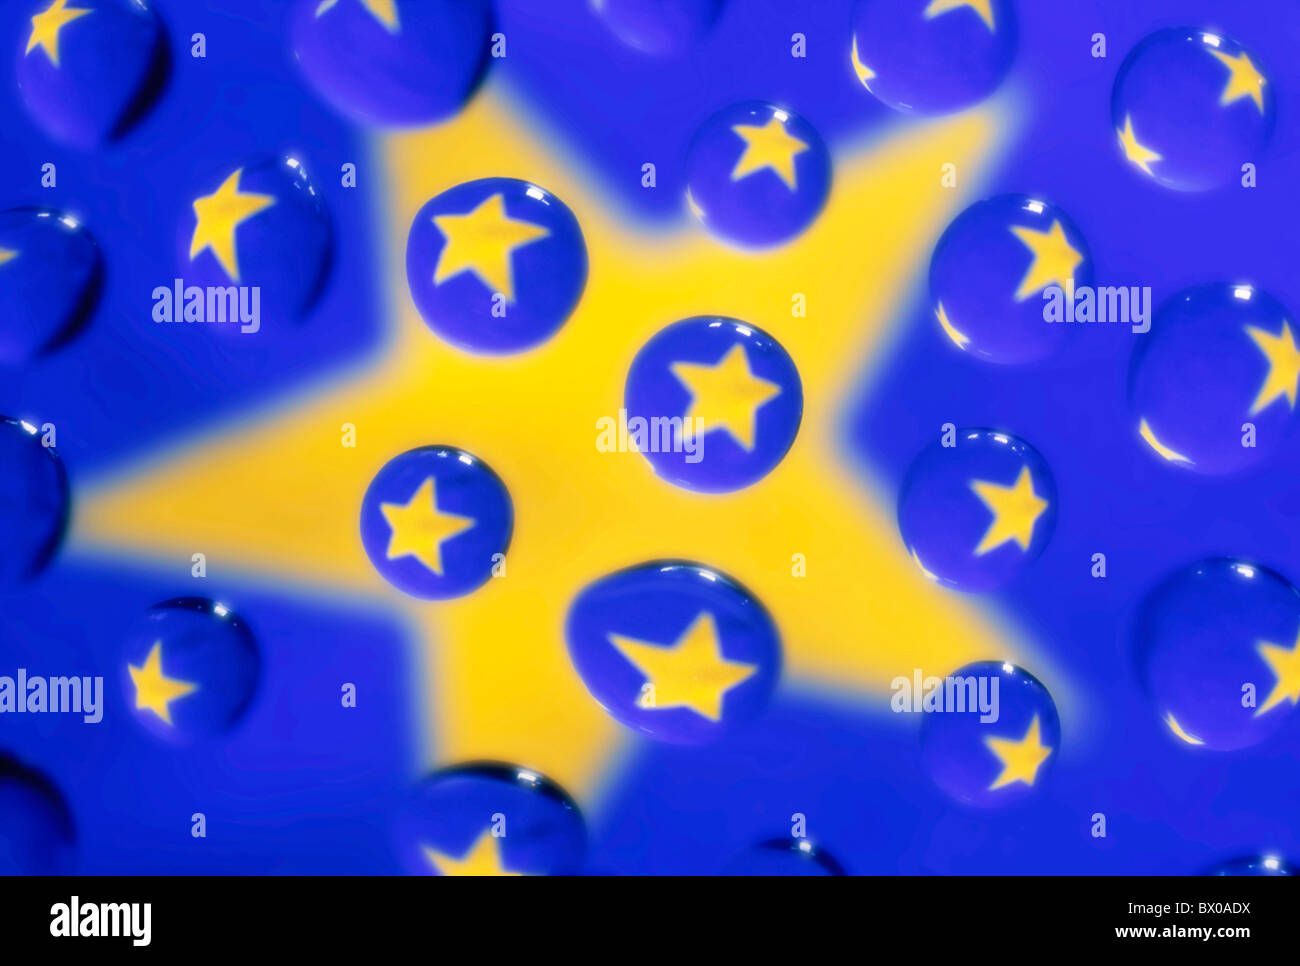 blue EU Europe European Union yellow graphic arts star stars still life symbol drop balls Stock Photo